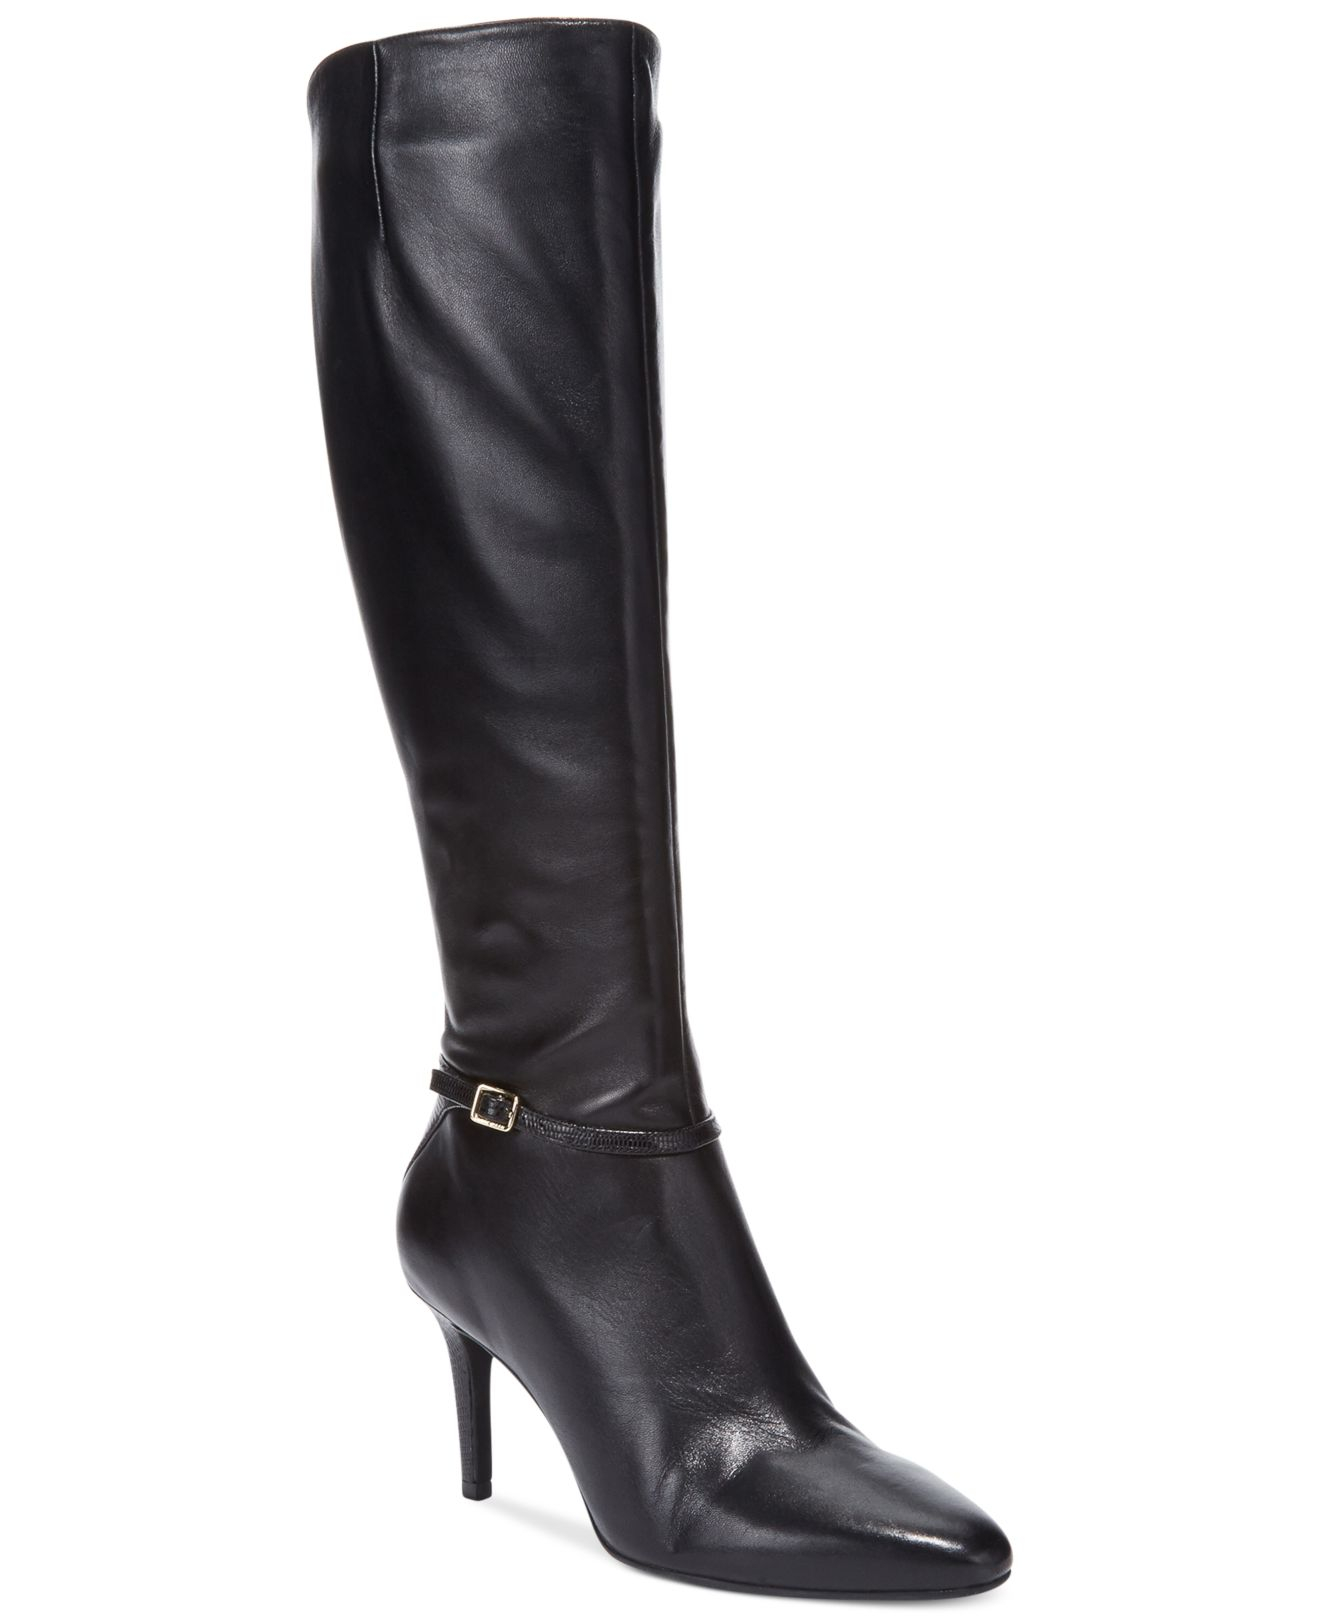 Lyst Cole Haan Women'S Garner Wide Calf Tall Dress Boots in Black